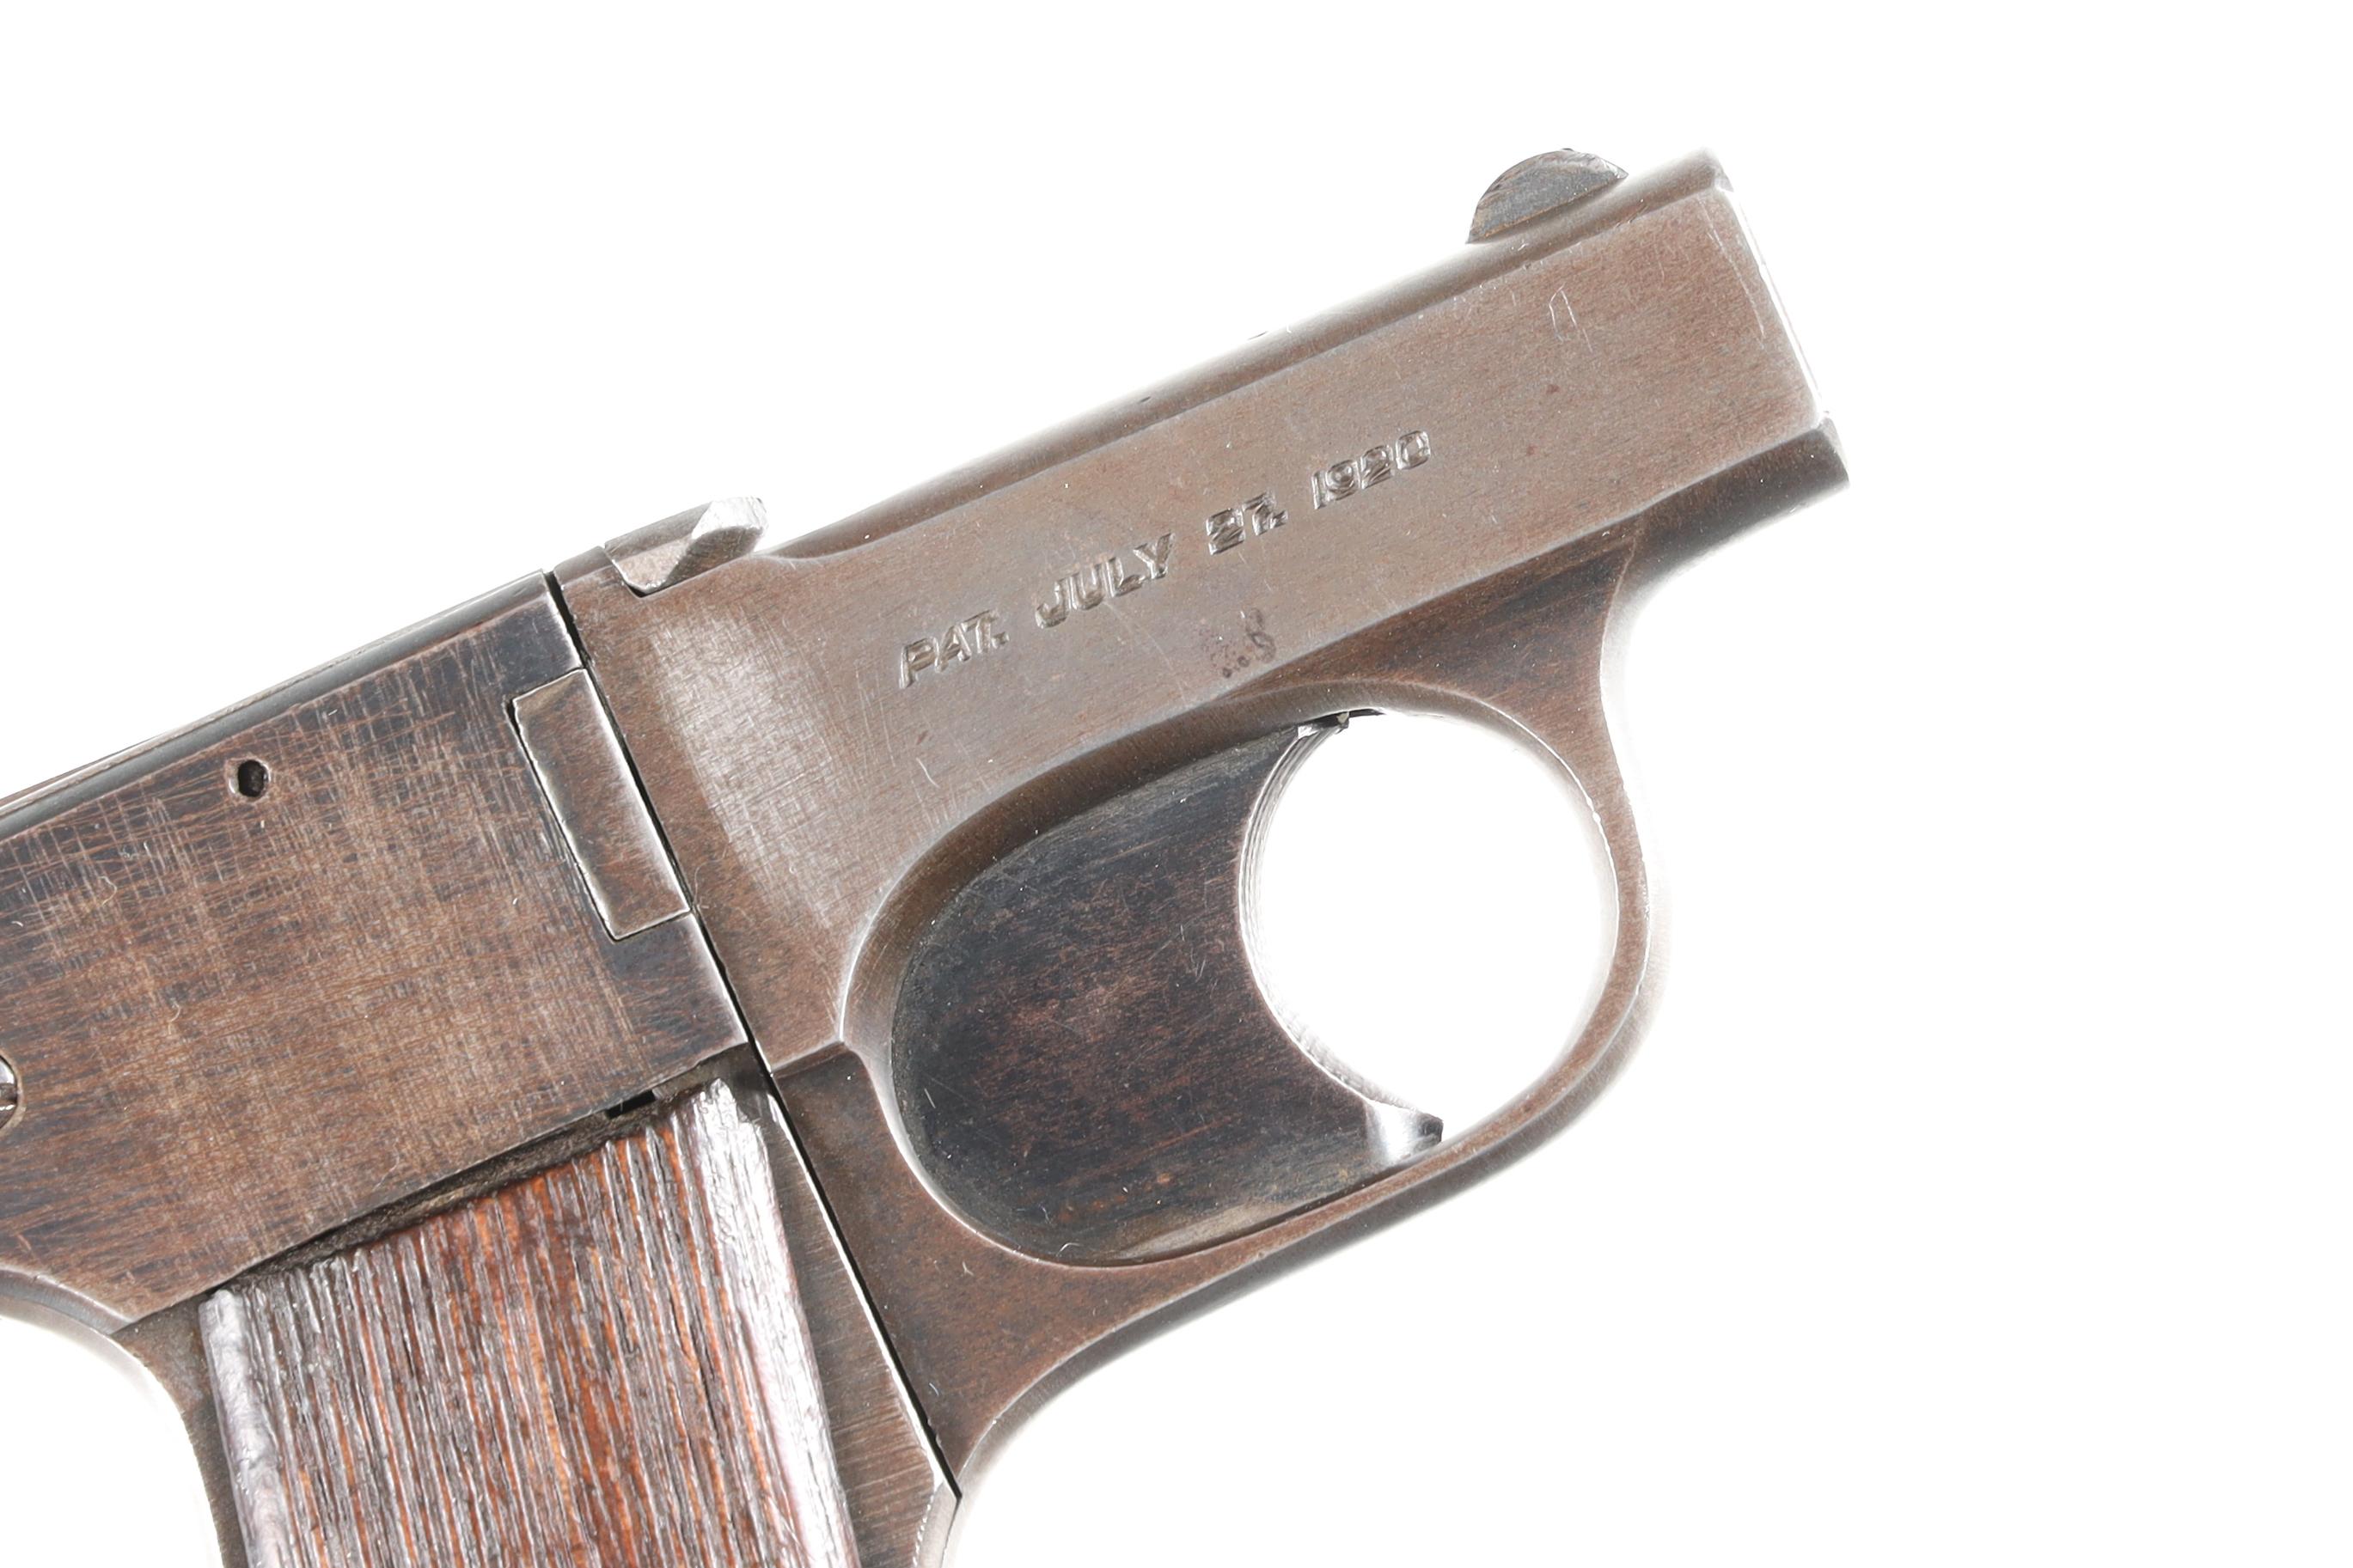 Mossberg Brownie Pistol .22 lr